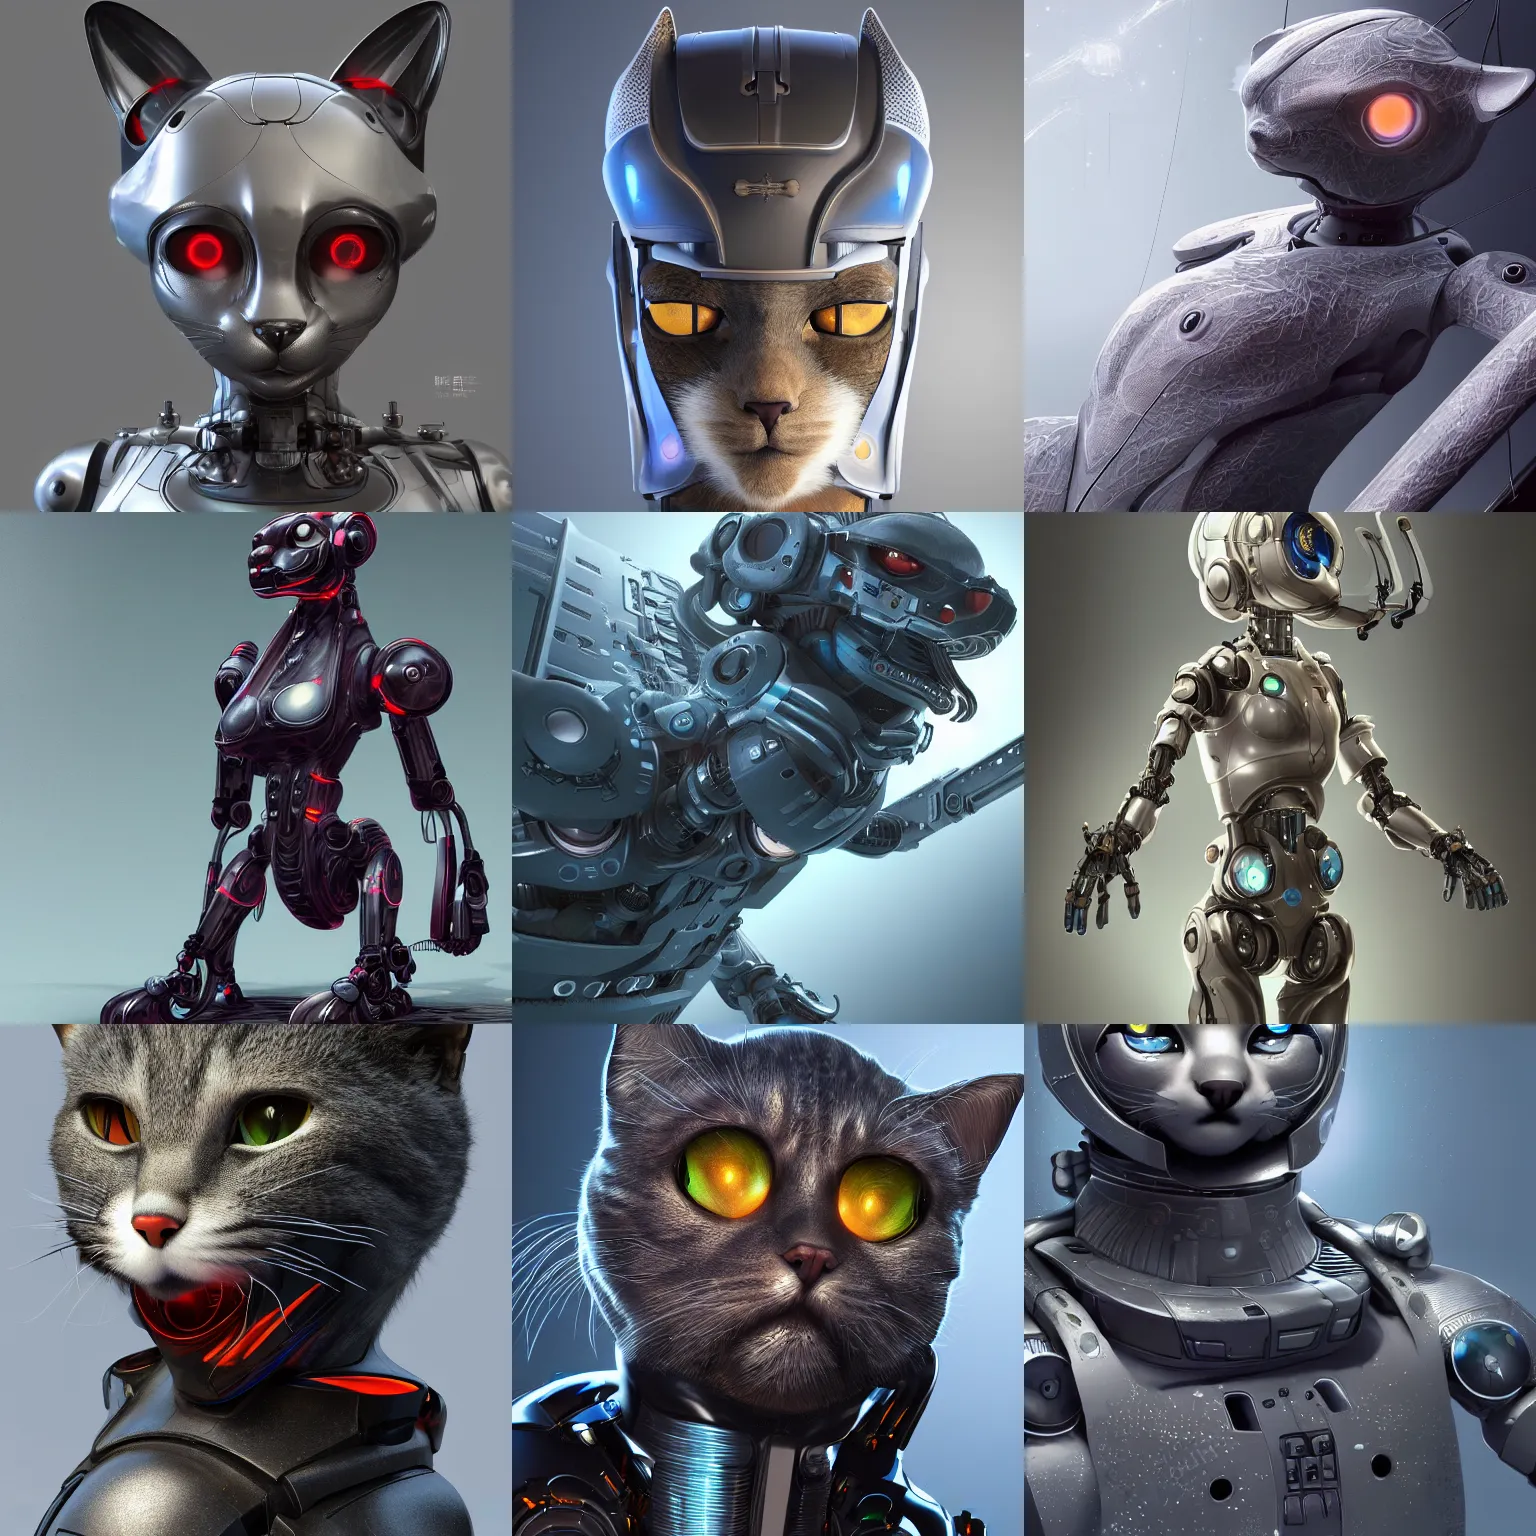 Prompt: cgsociety render of anthropomorph scifi cat robot, hyperdetailed character illustration trending on ArtStationHQ